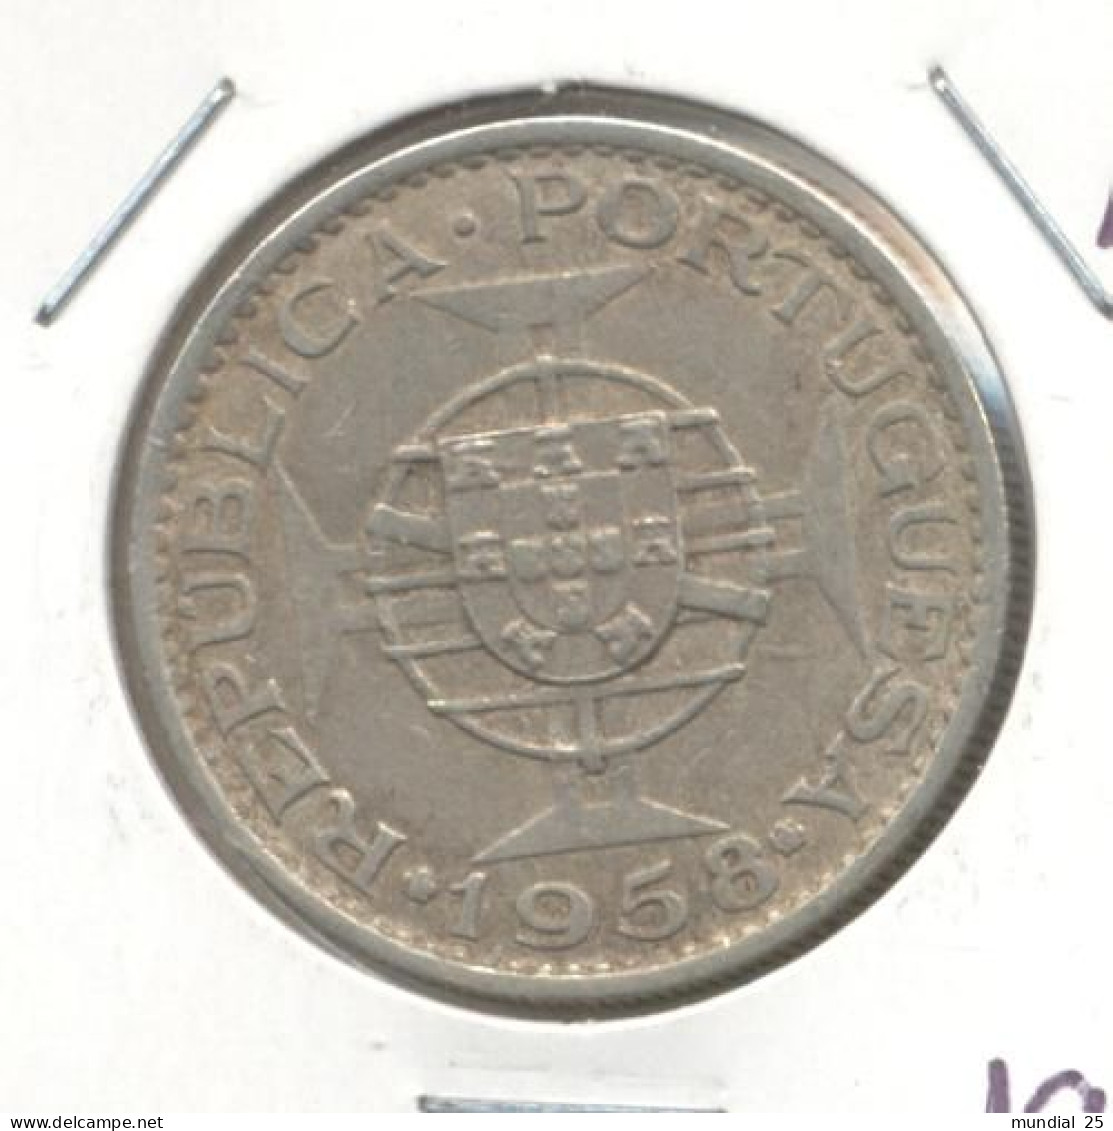 TIMOR PORTUGAL 1$00 ESCUDO 1958 - Timor